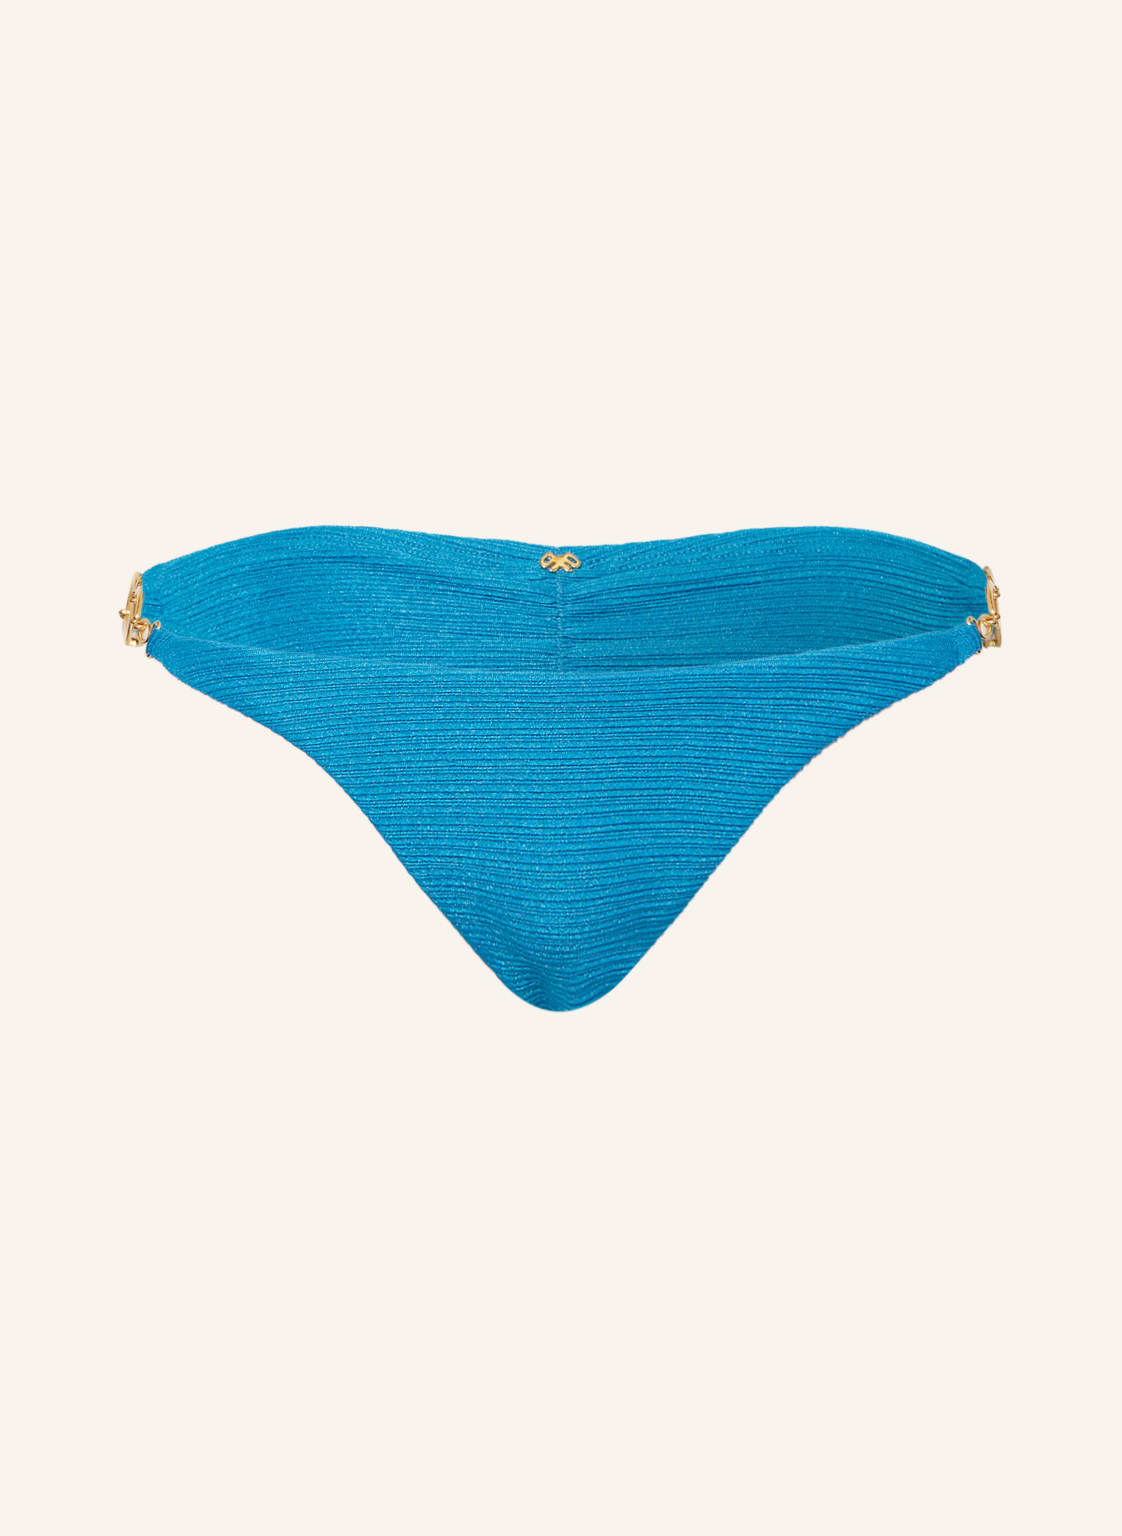 Pq Triangel-Bikini-Hose Turquoise blau von PQ